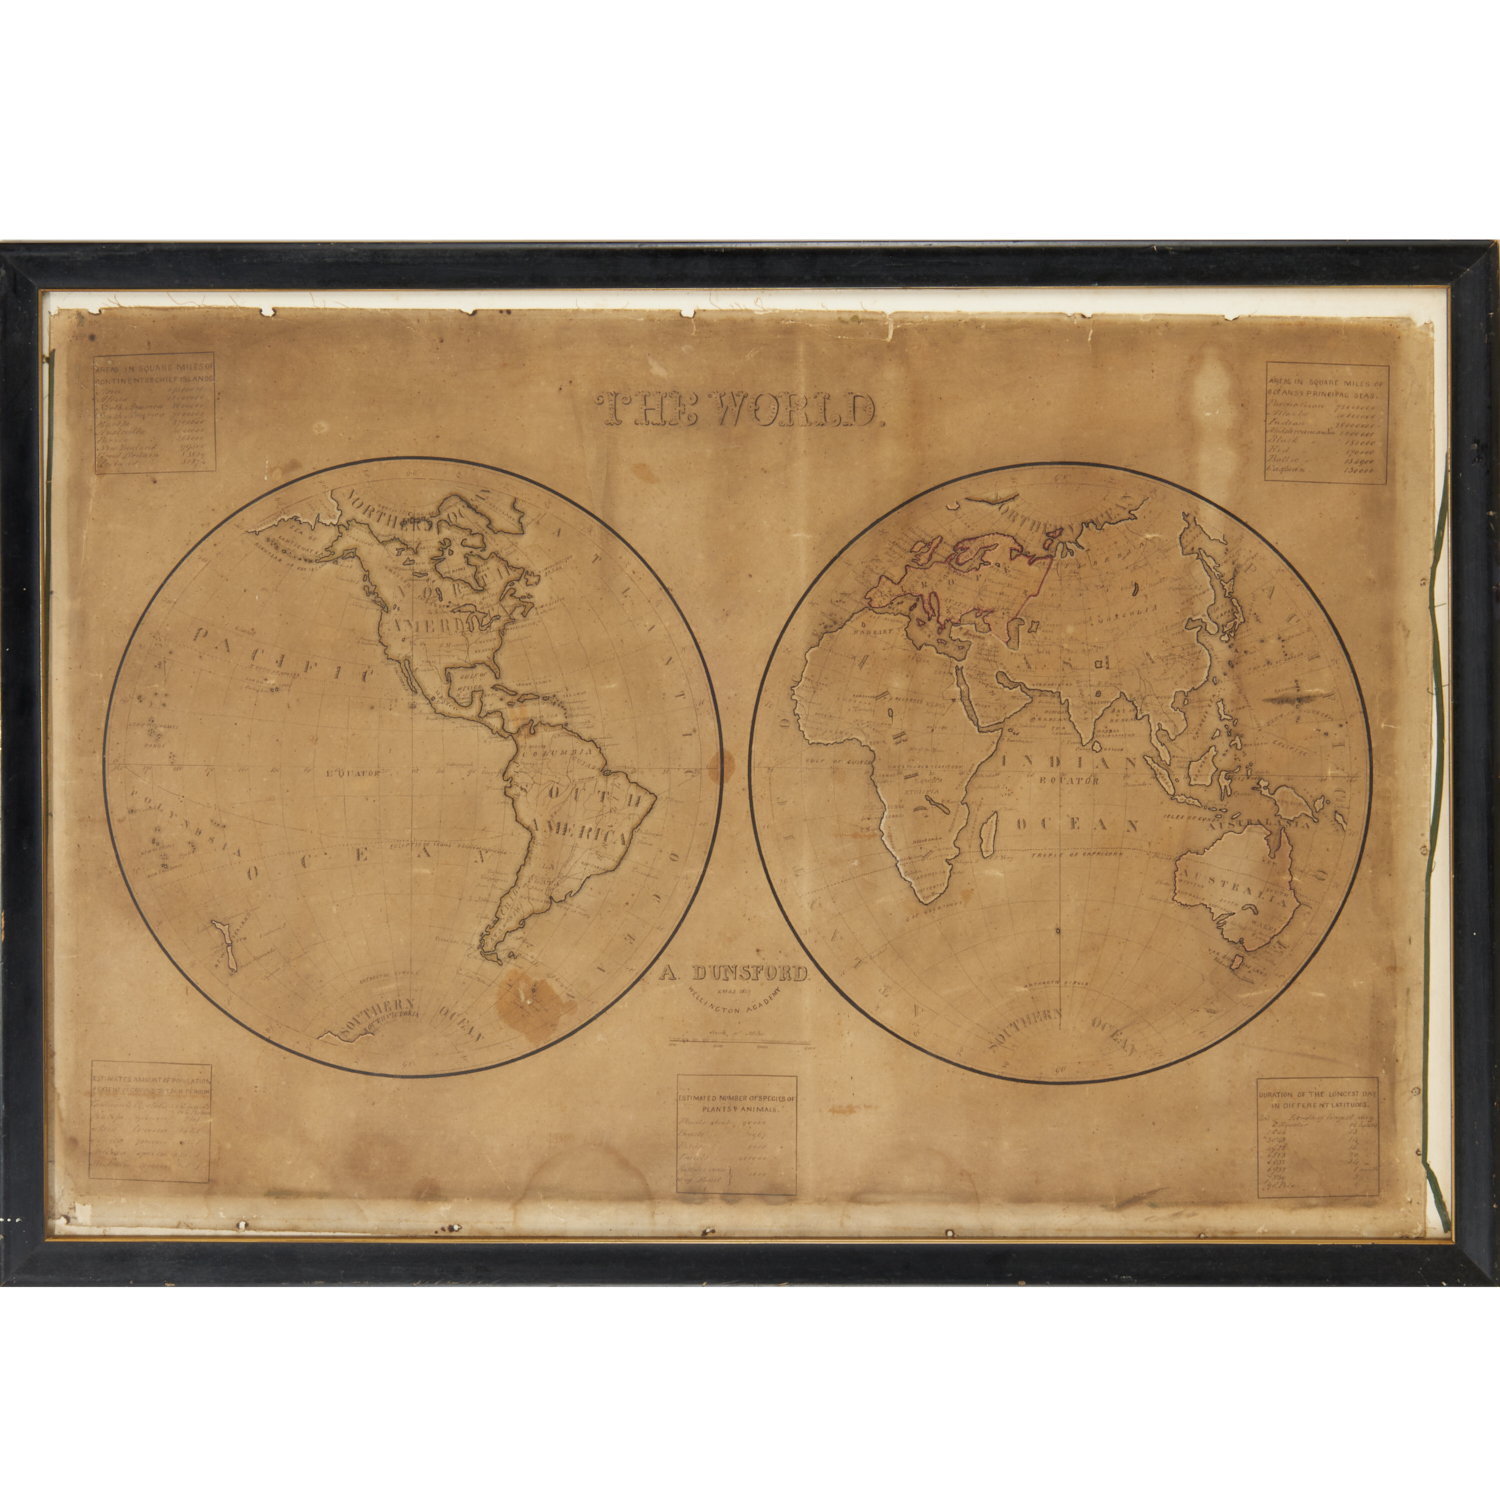 A. DUNSFORD, HAND-DRAWN WORLD MAP,